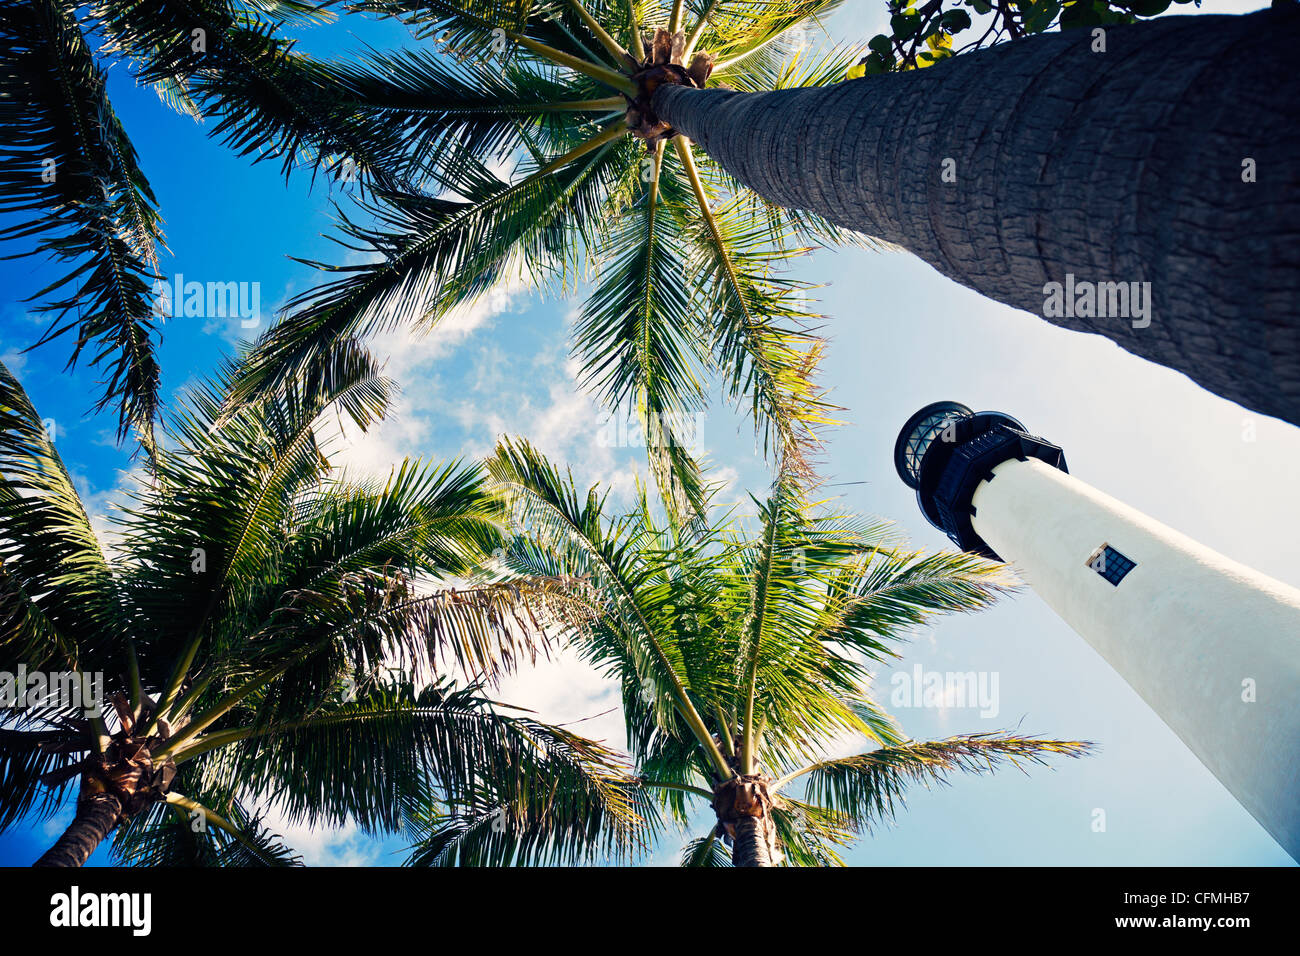 USA, Floride, Key Biscayne, phare avec palmiers Banque D'Images